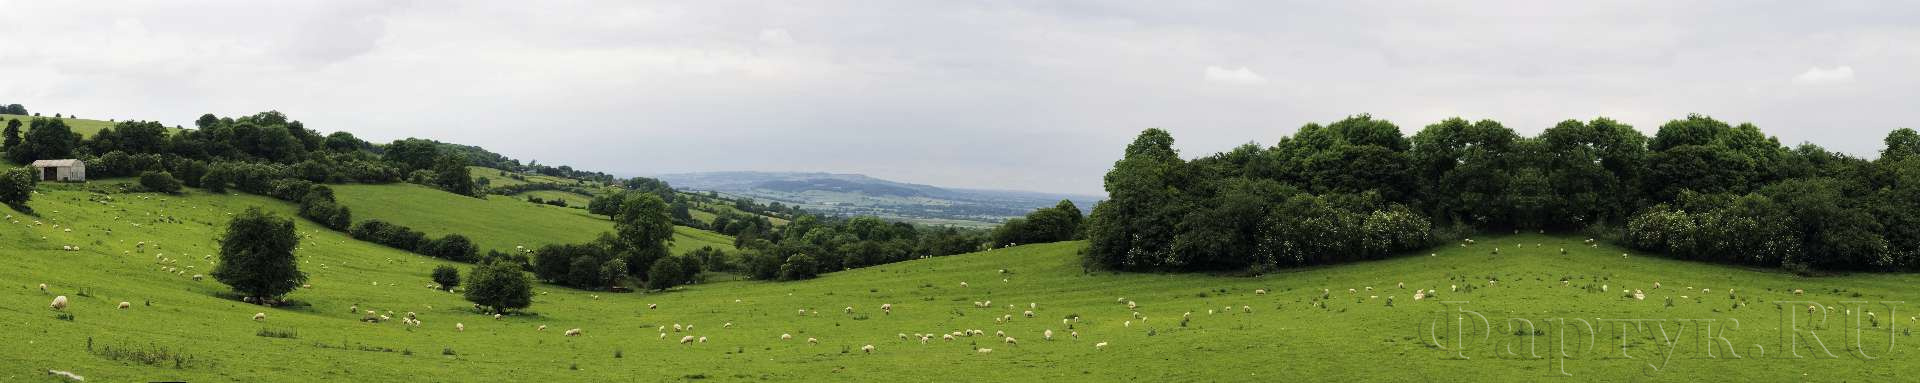 Холм с кочующими овцами, Англия